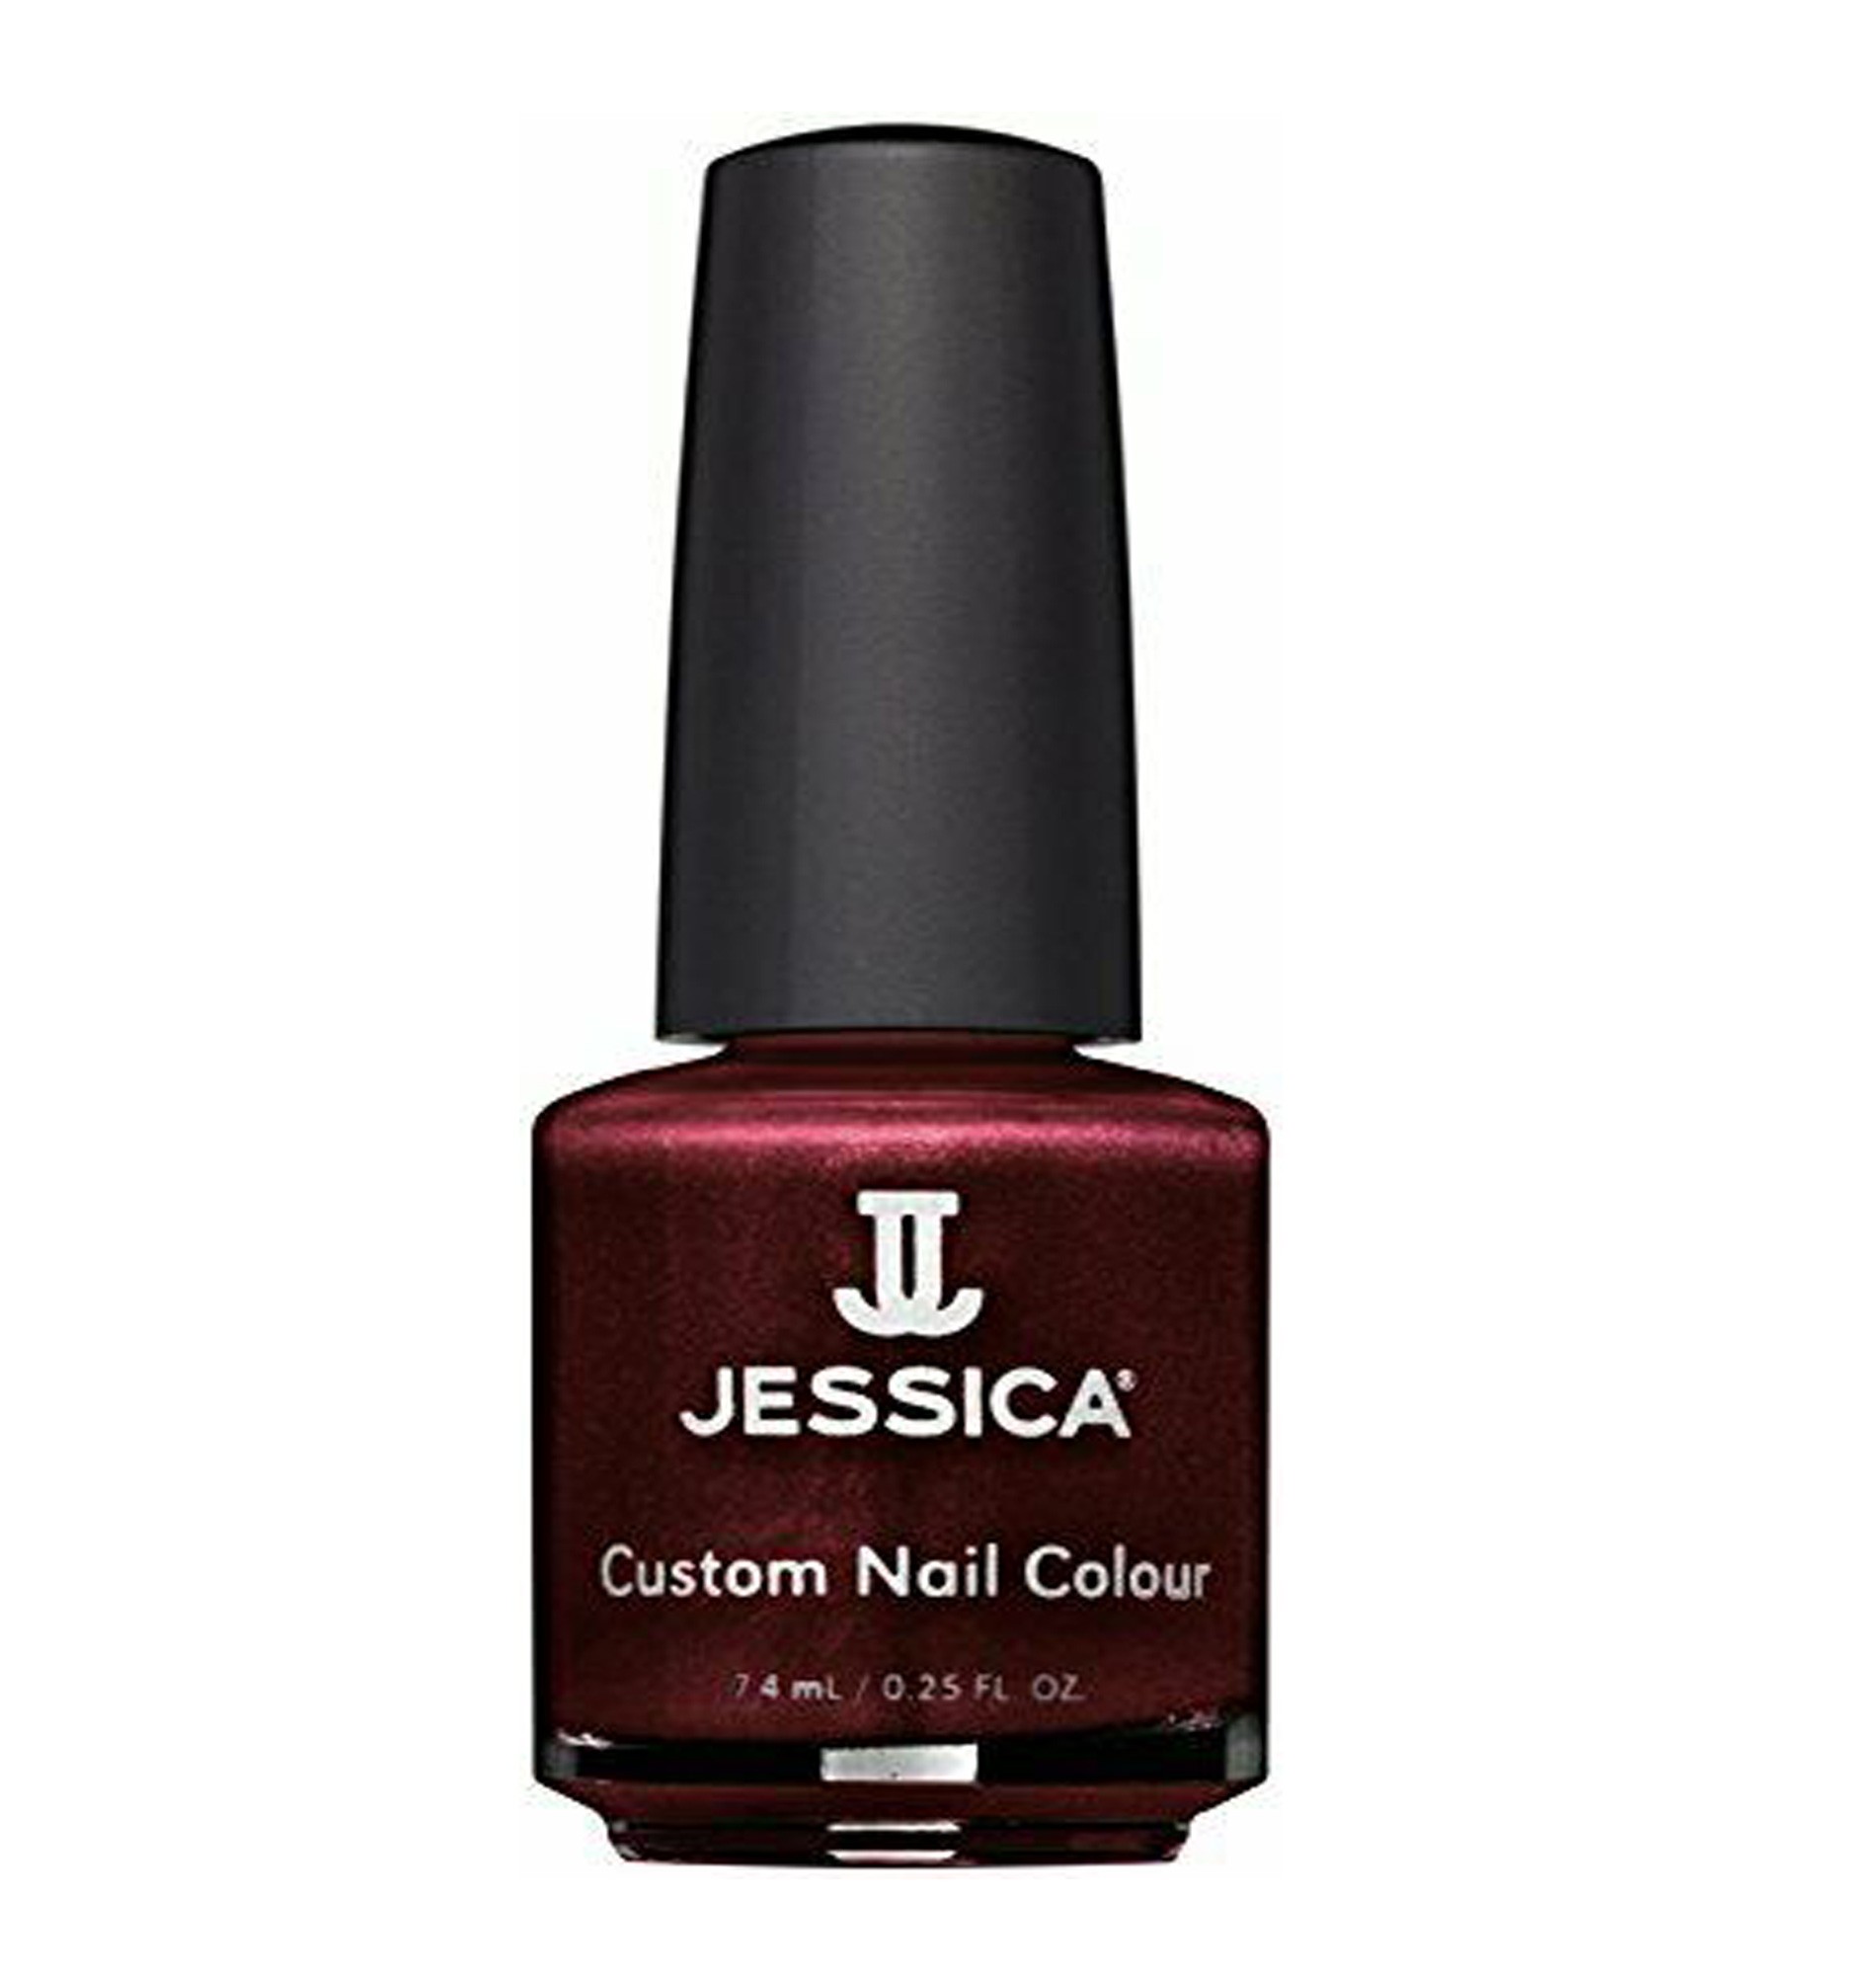 Jessica Custom Nail Colour Notorious 708